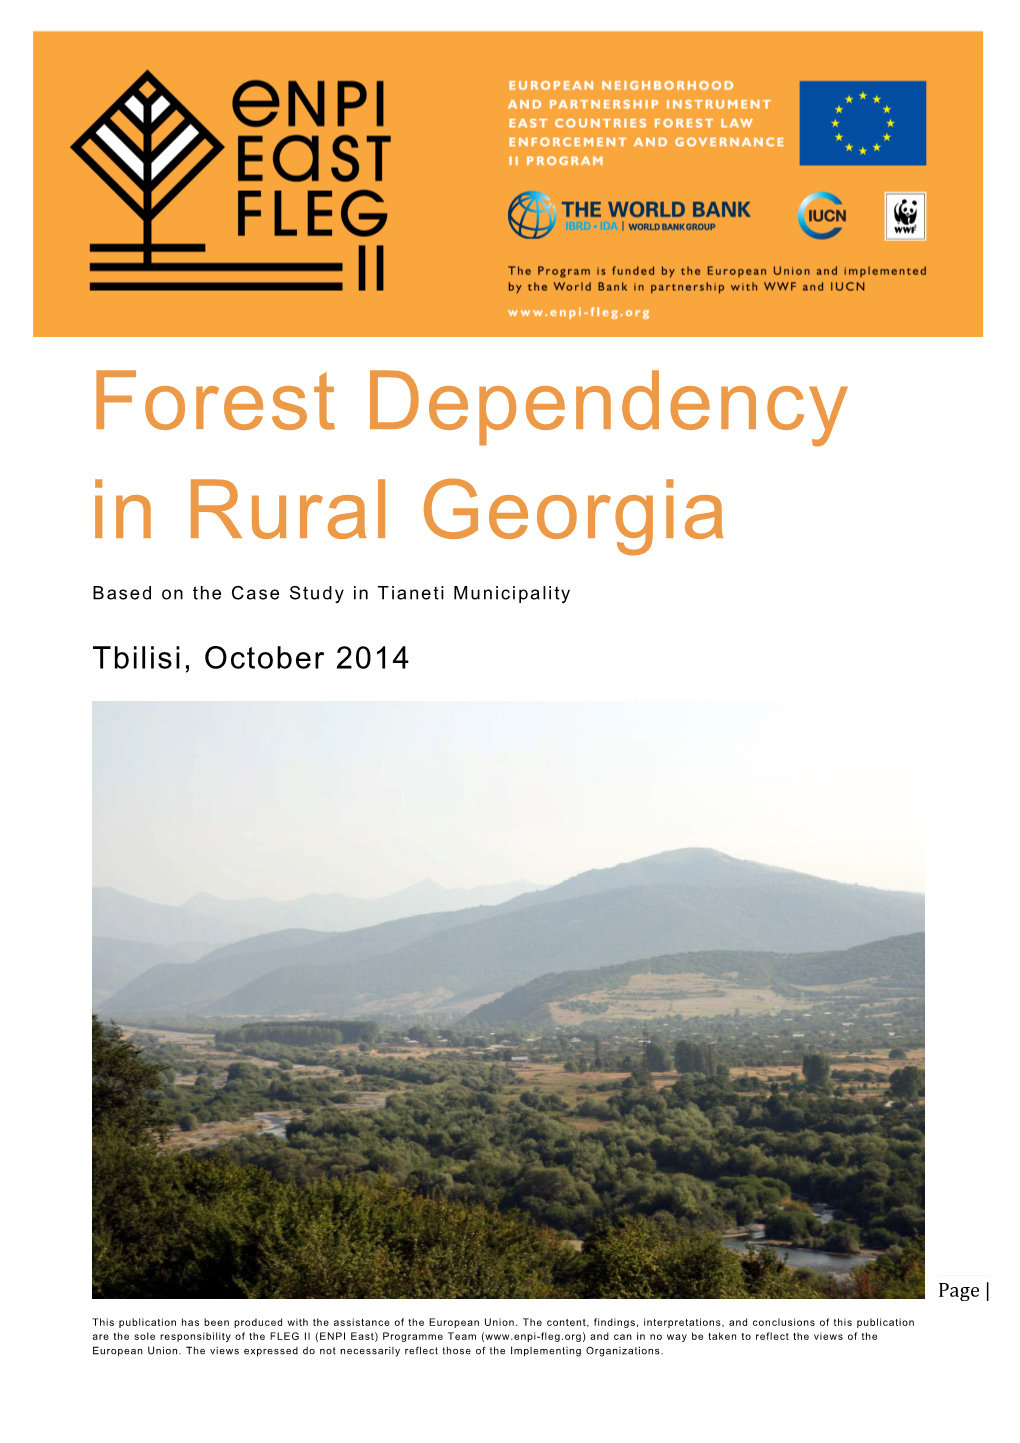 Forest Dependency in Rural Georgia